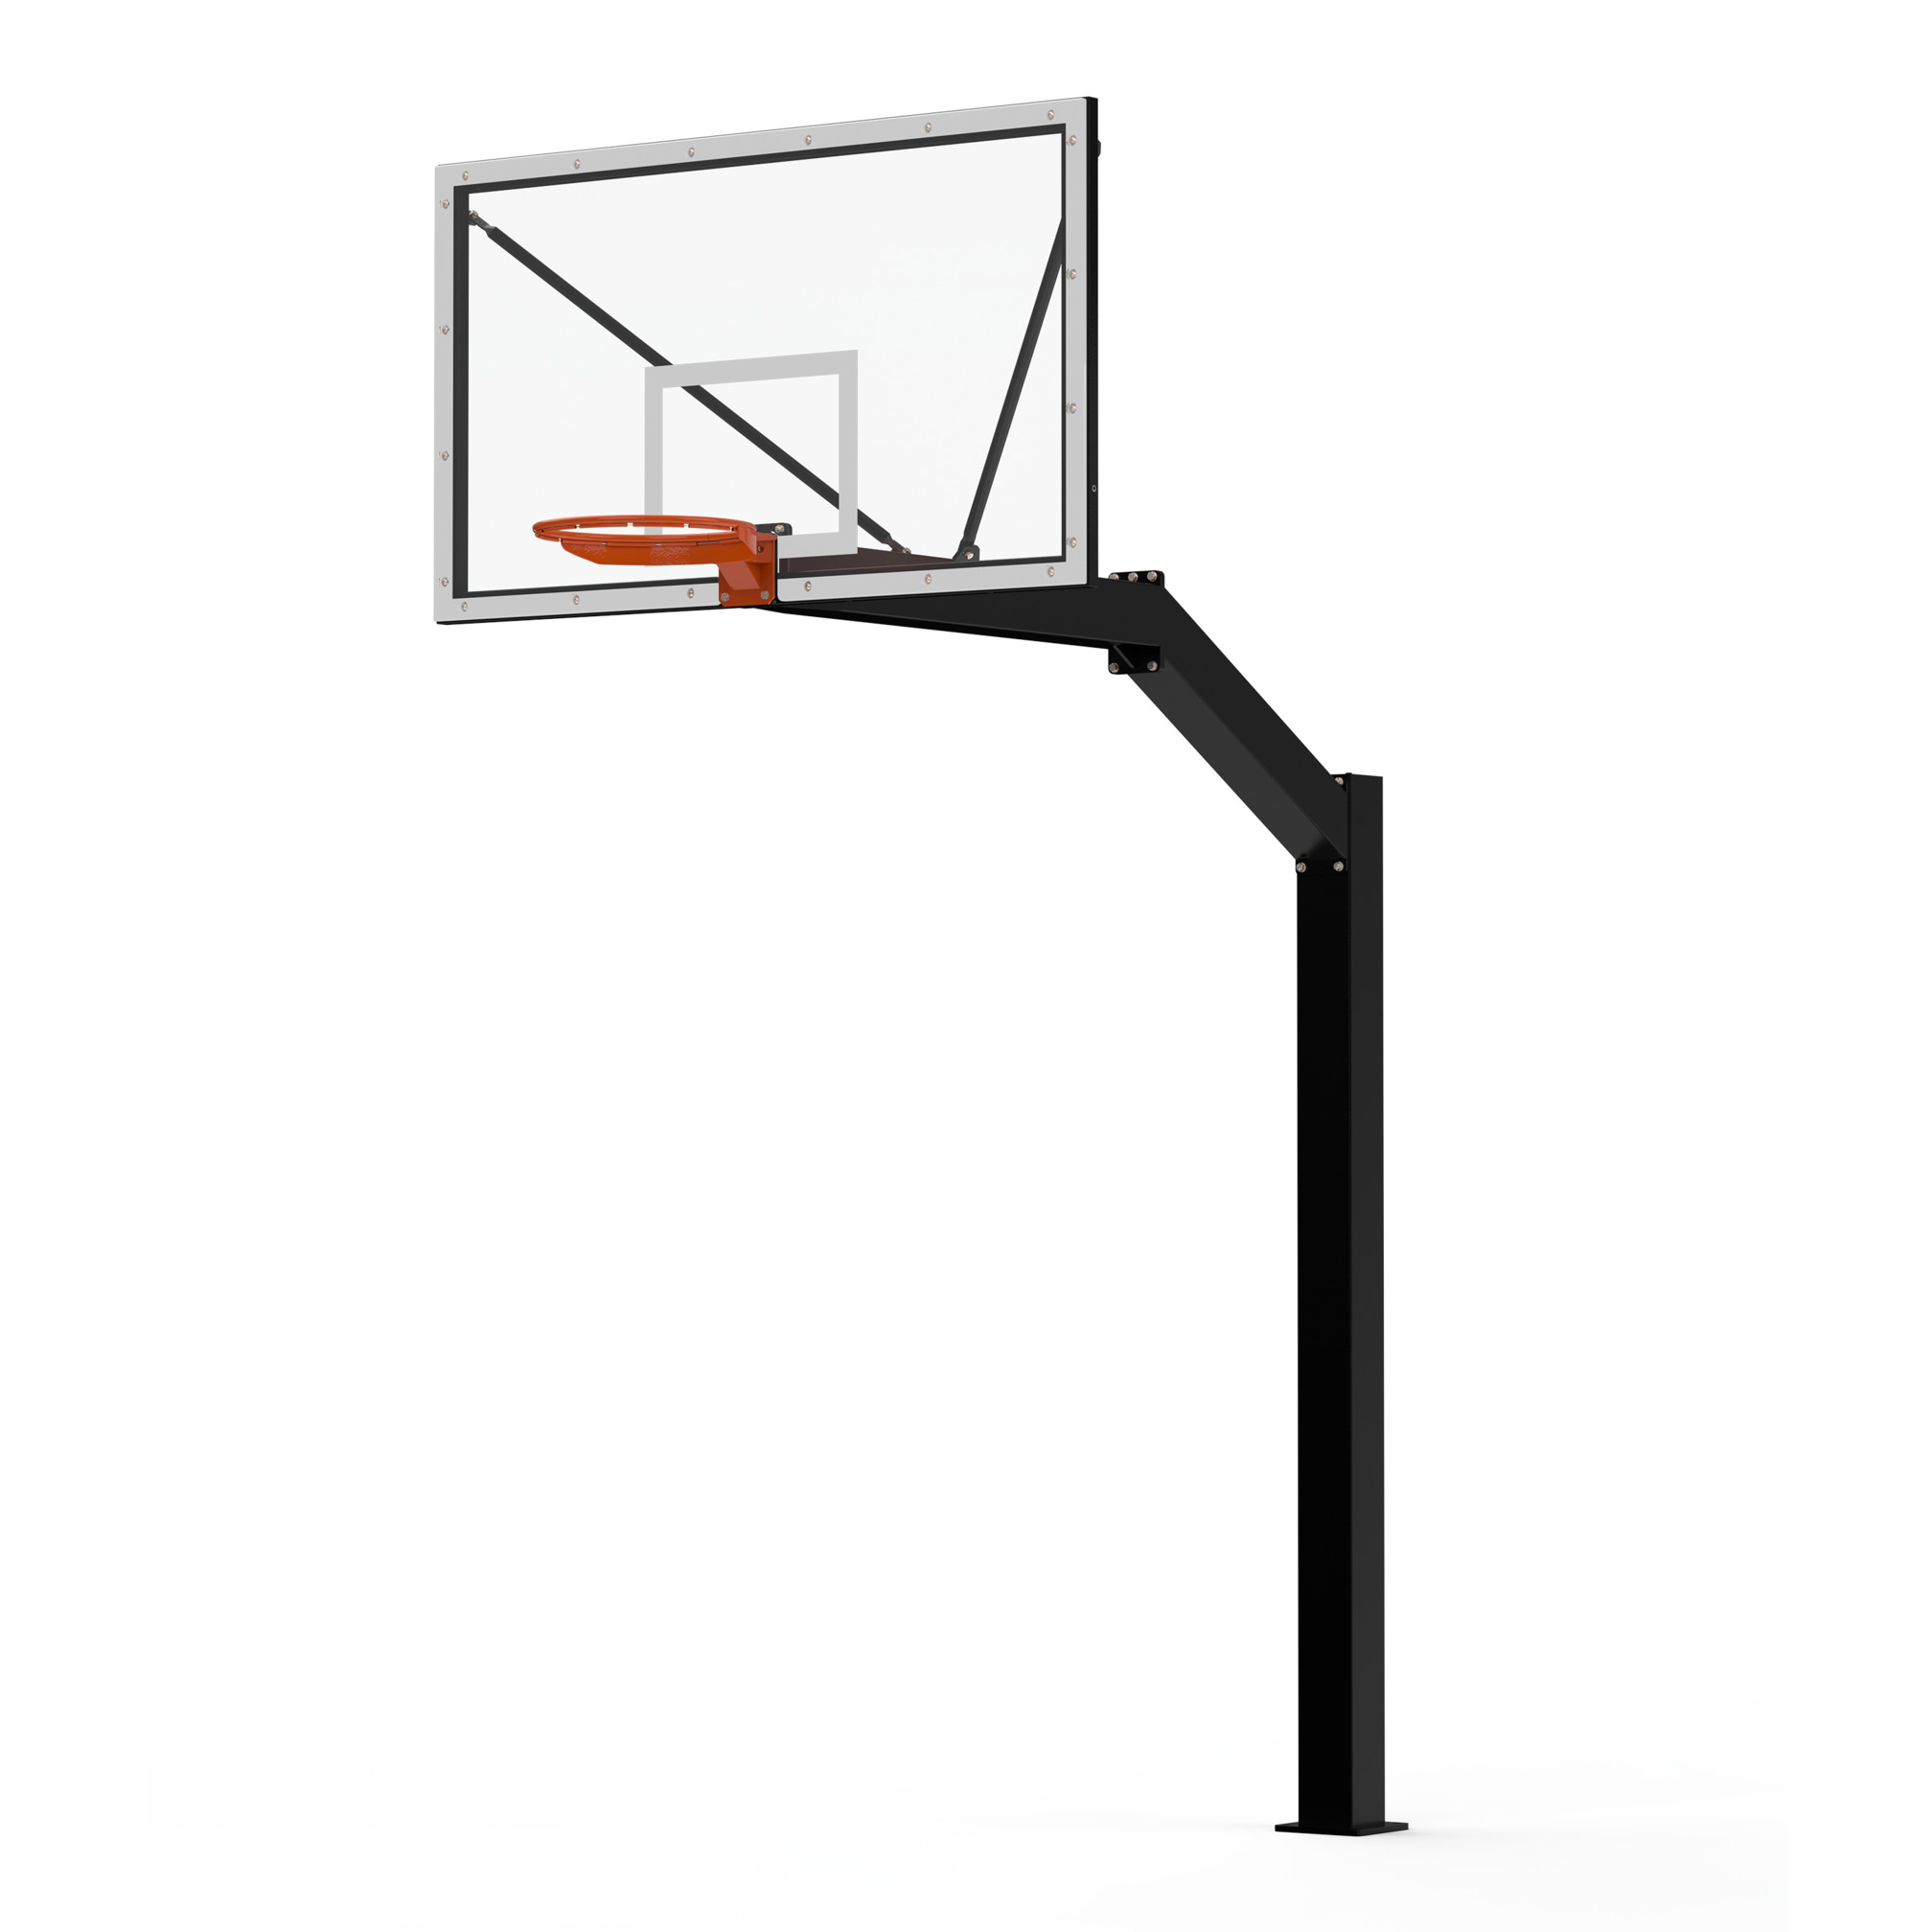 Basketball-Anlage Urban Court Slammer, 225 cm Ausladung, inkl. Basketballkorb Wettkampf